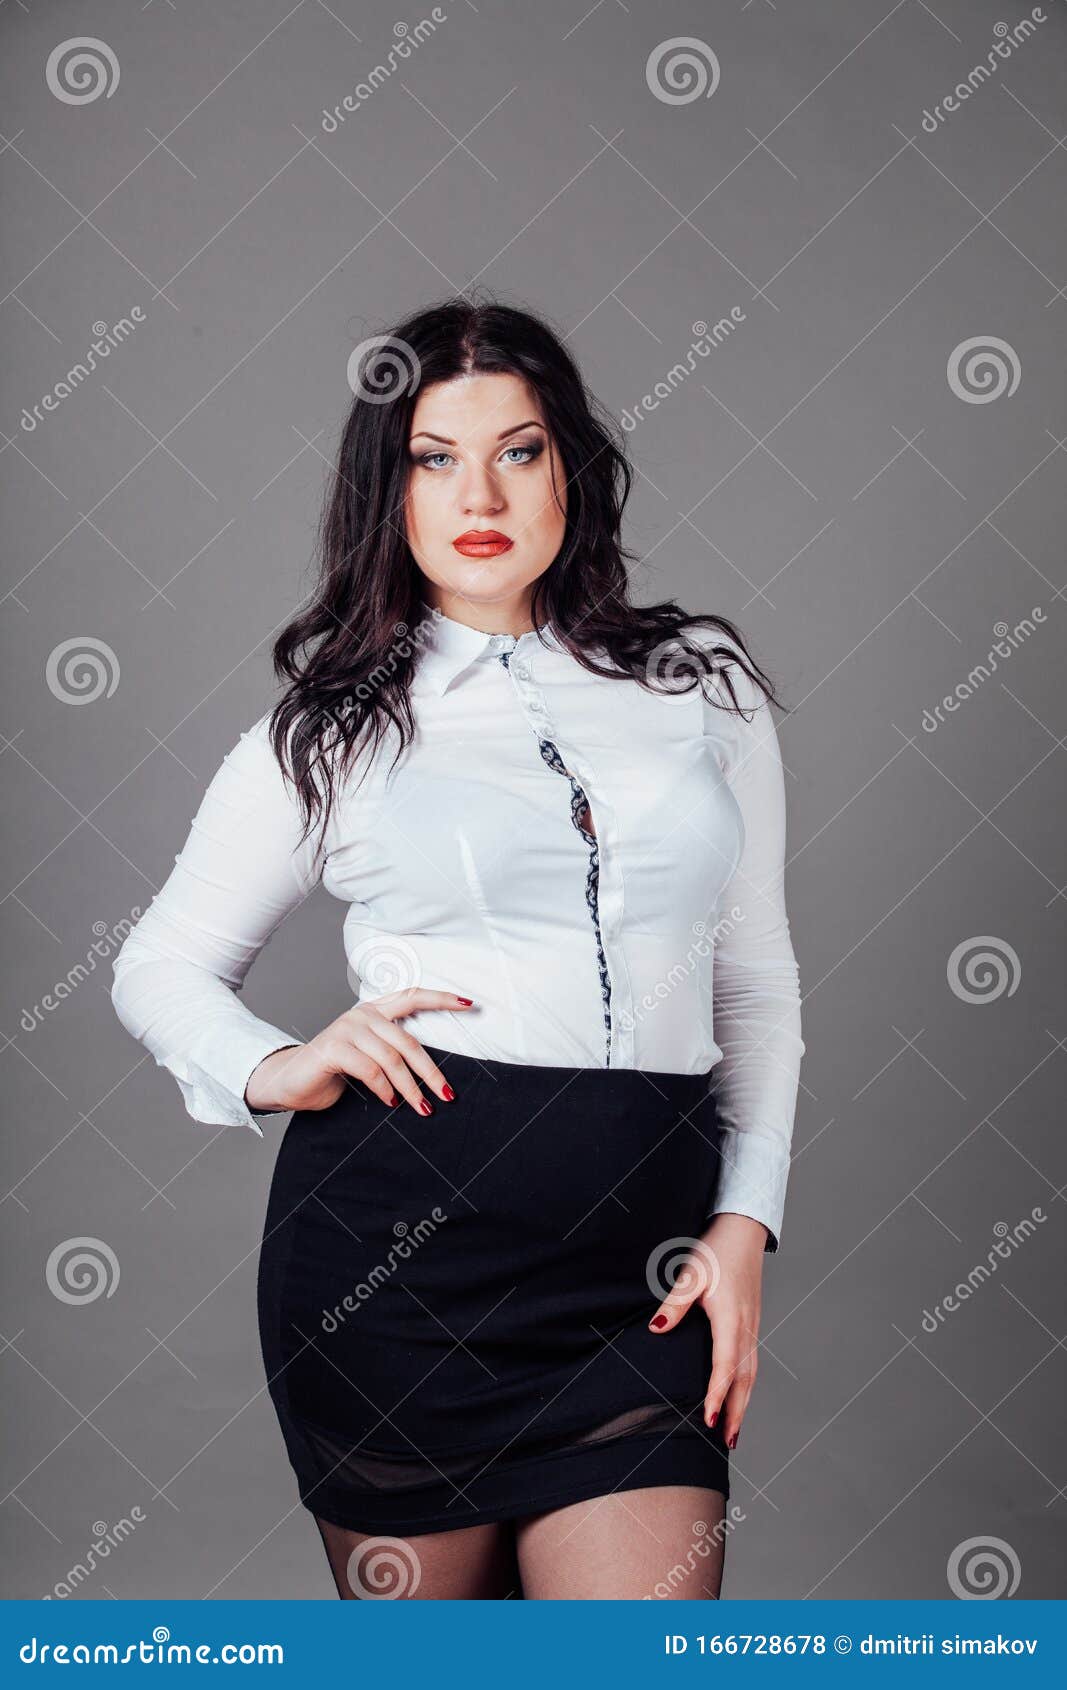 Portrait of Major Business Woman Business Suit Stock Photo - Image of ...